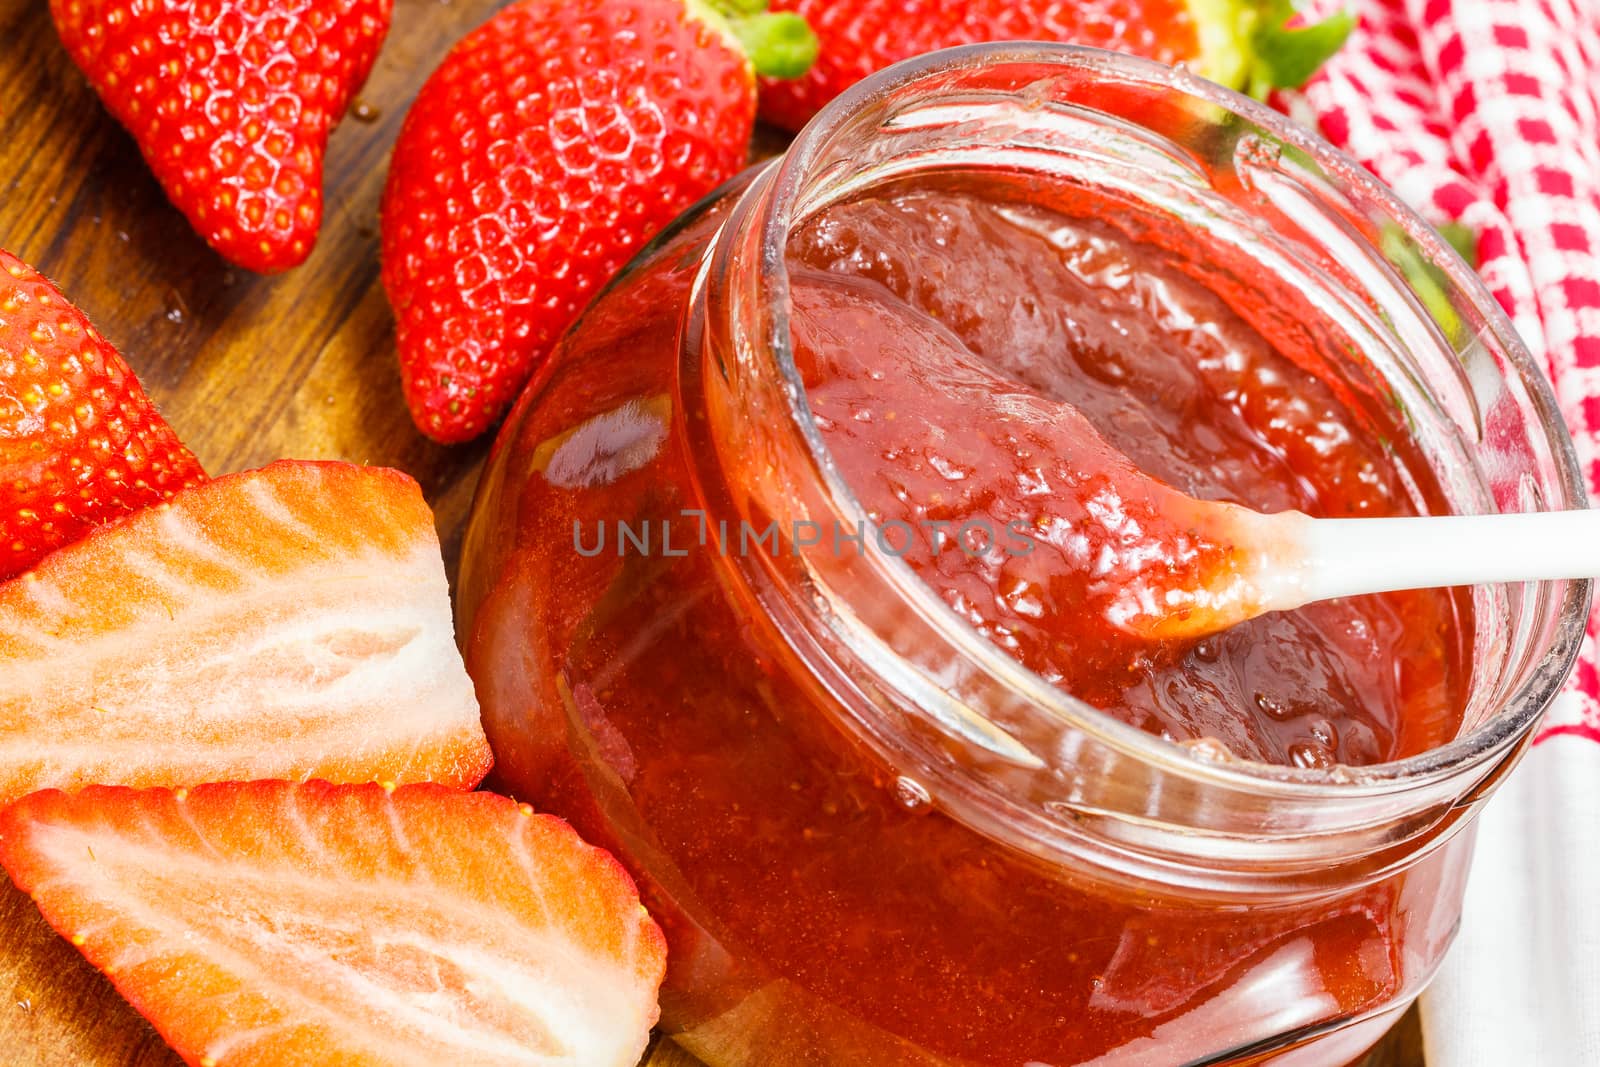 Strawberry jam by Slast20